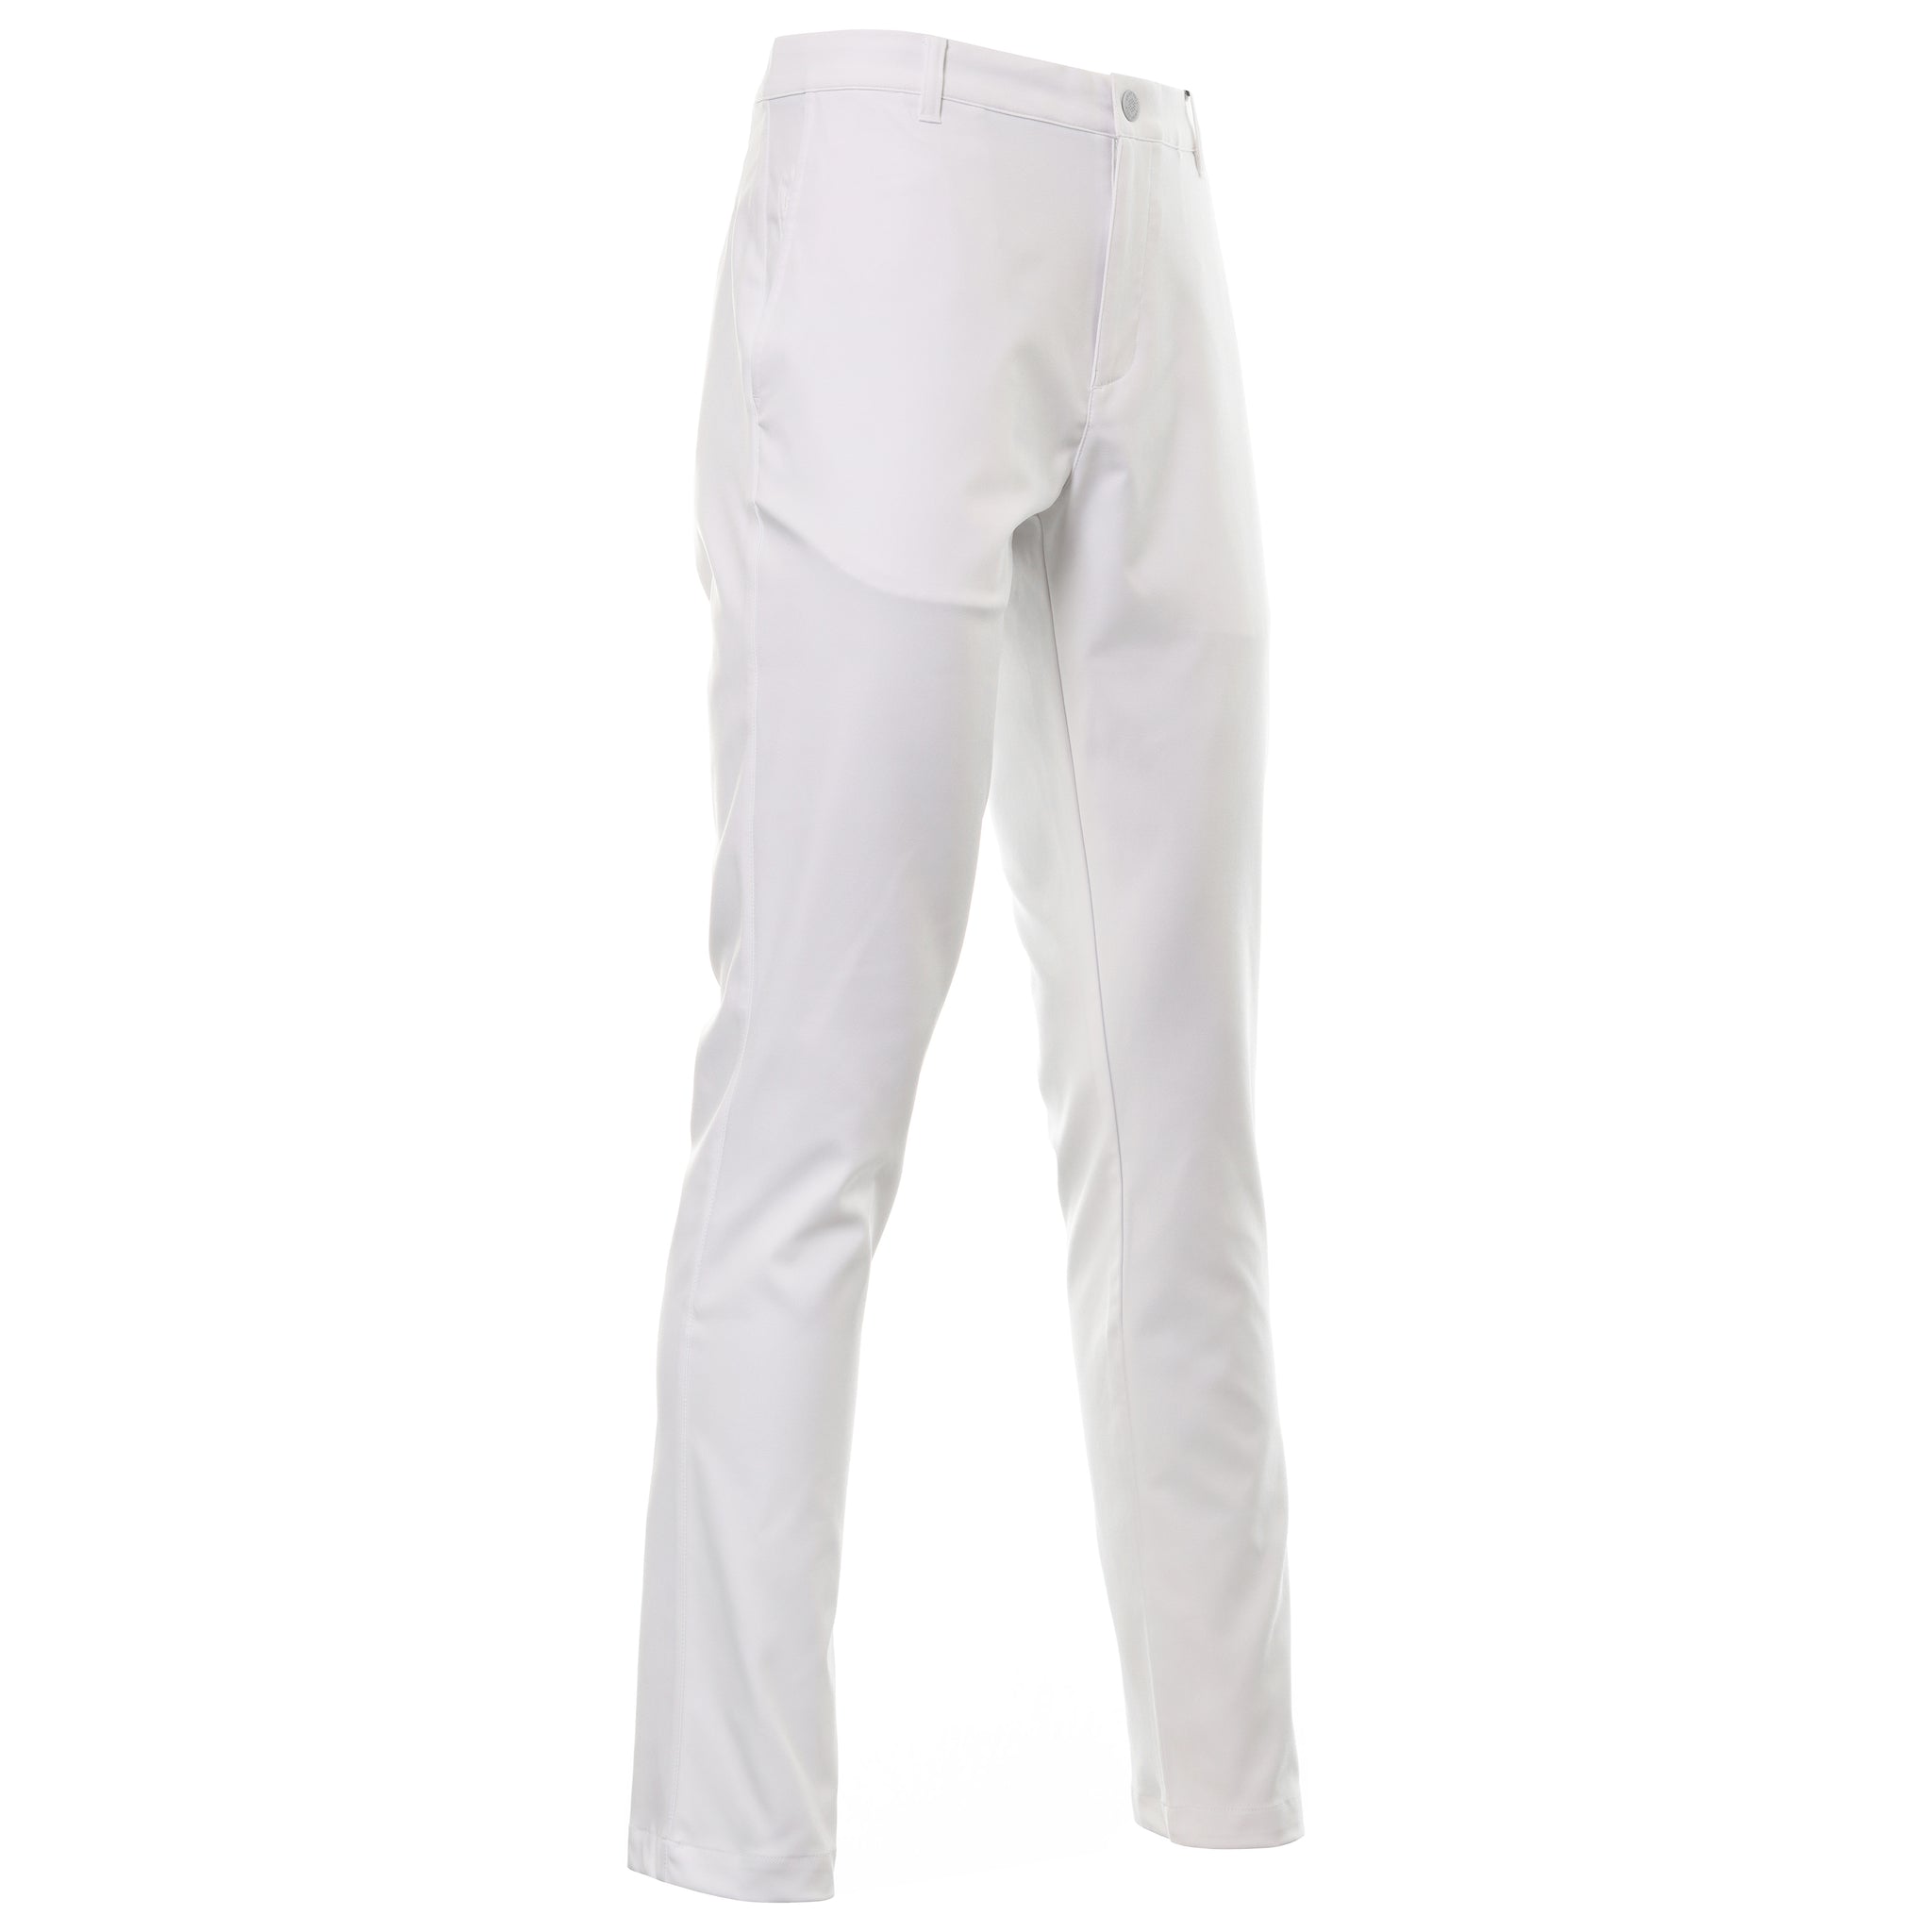 puma-golf-dealer-tailored-pant-535524-white-glow-01